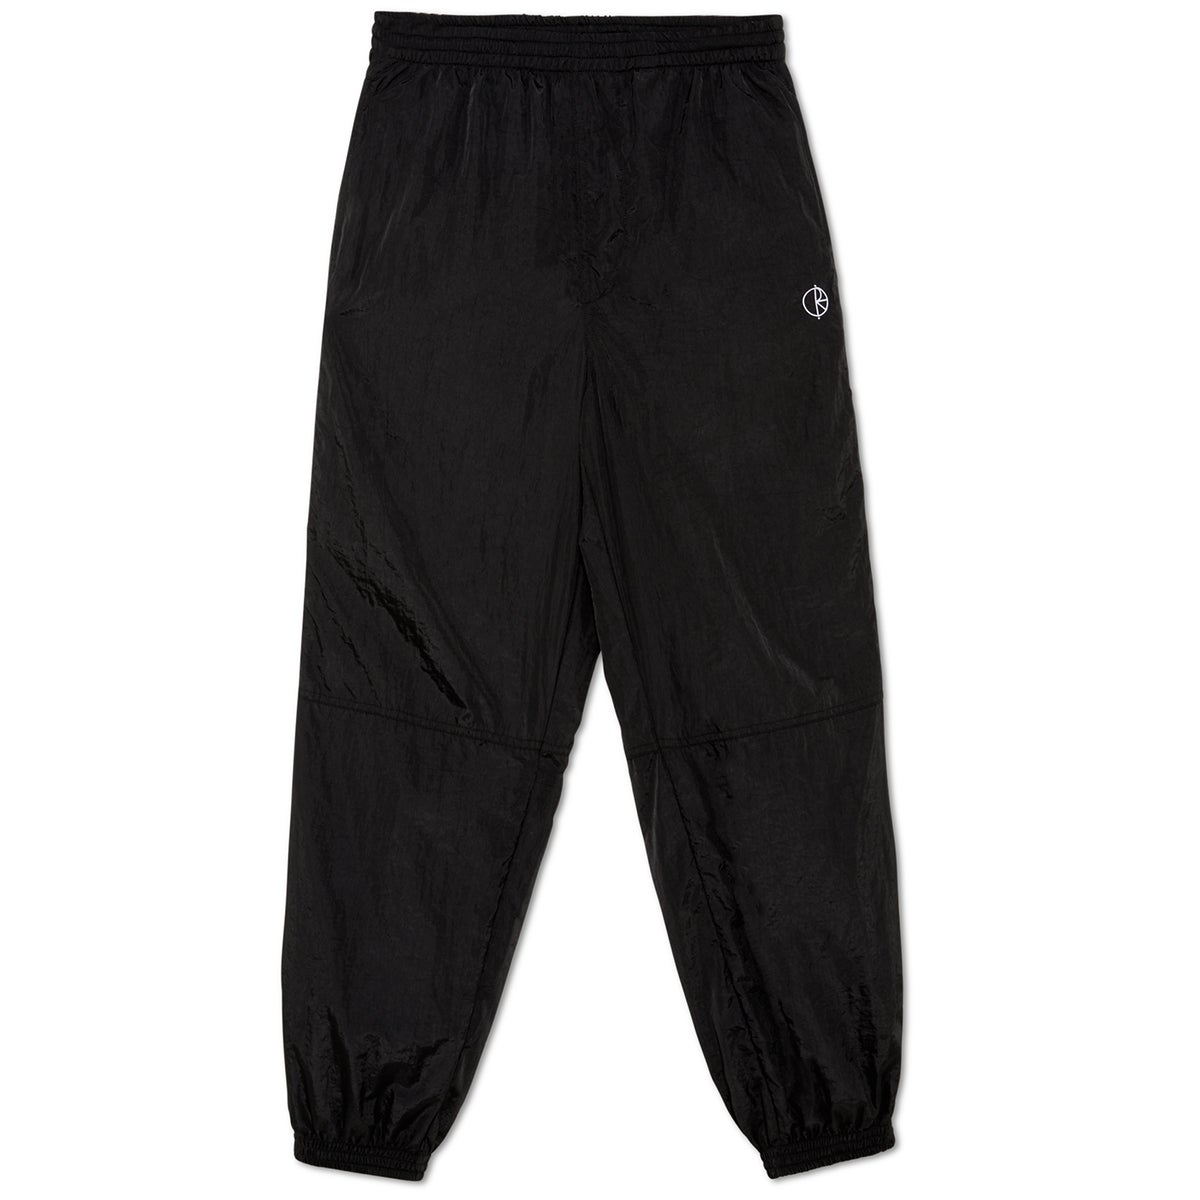 Polar Lasse Track Pants in Black | Boardertown